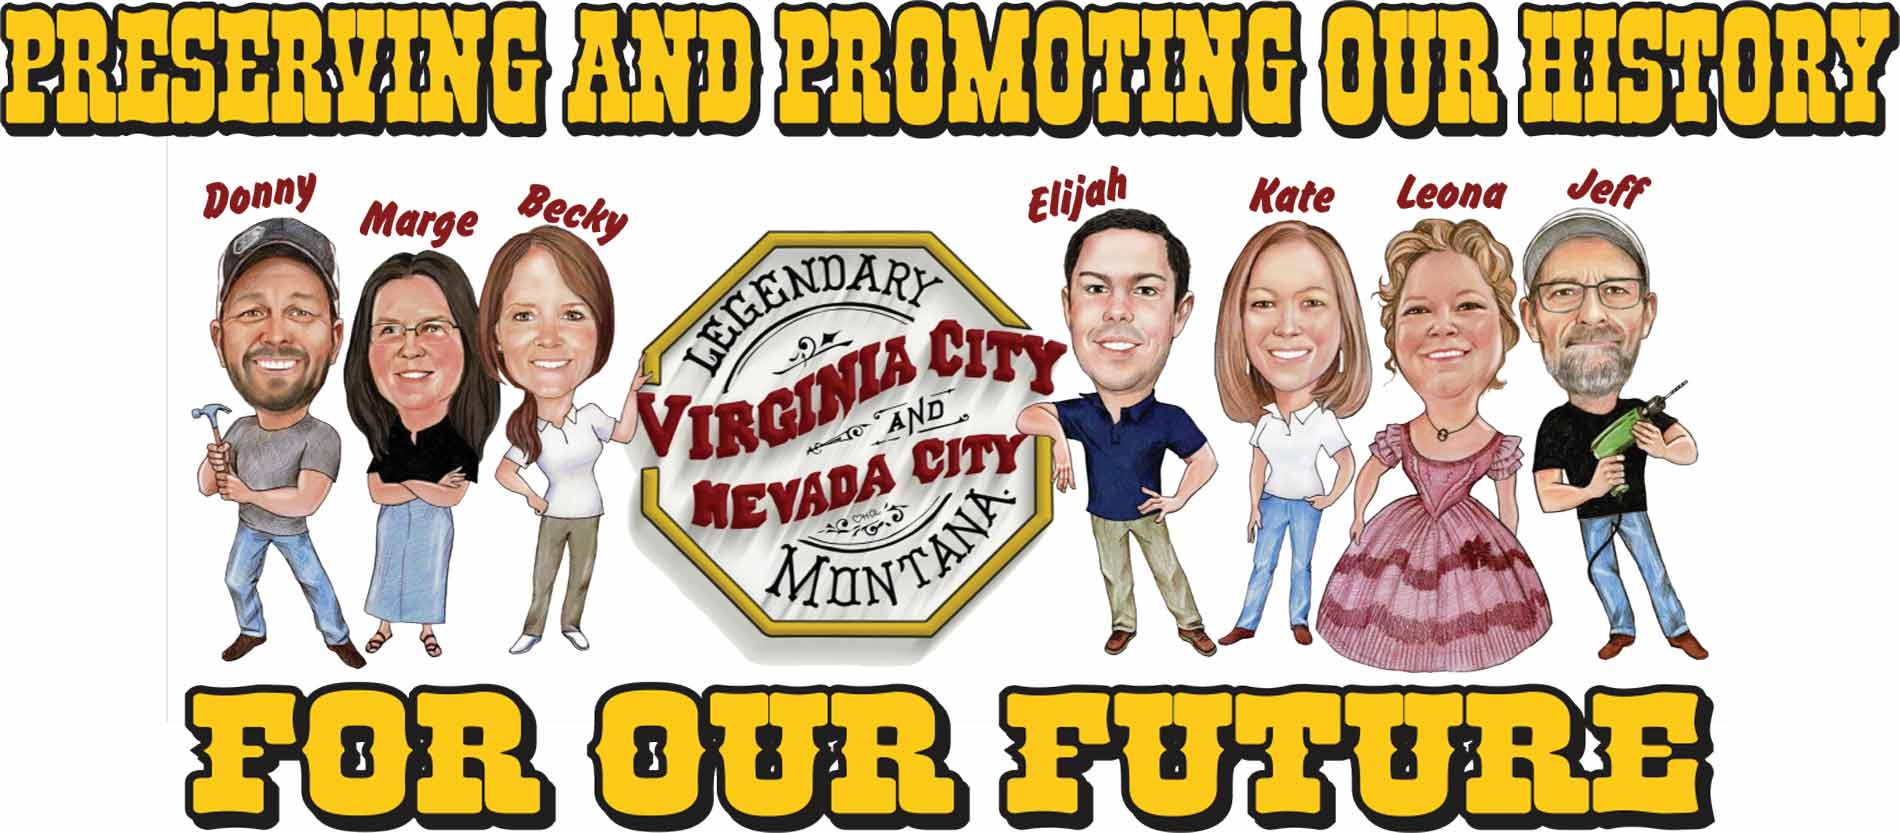 Virginia City Crew